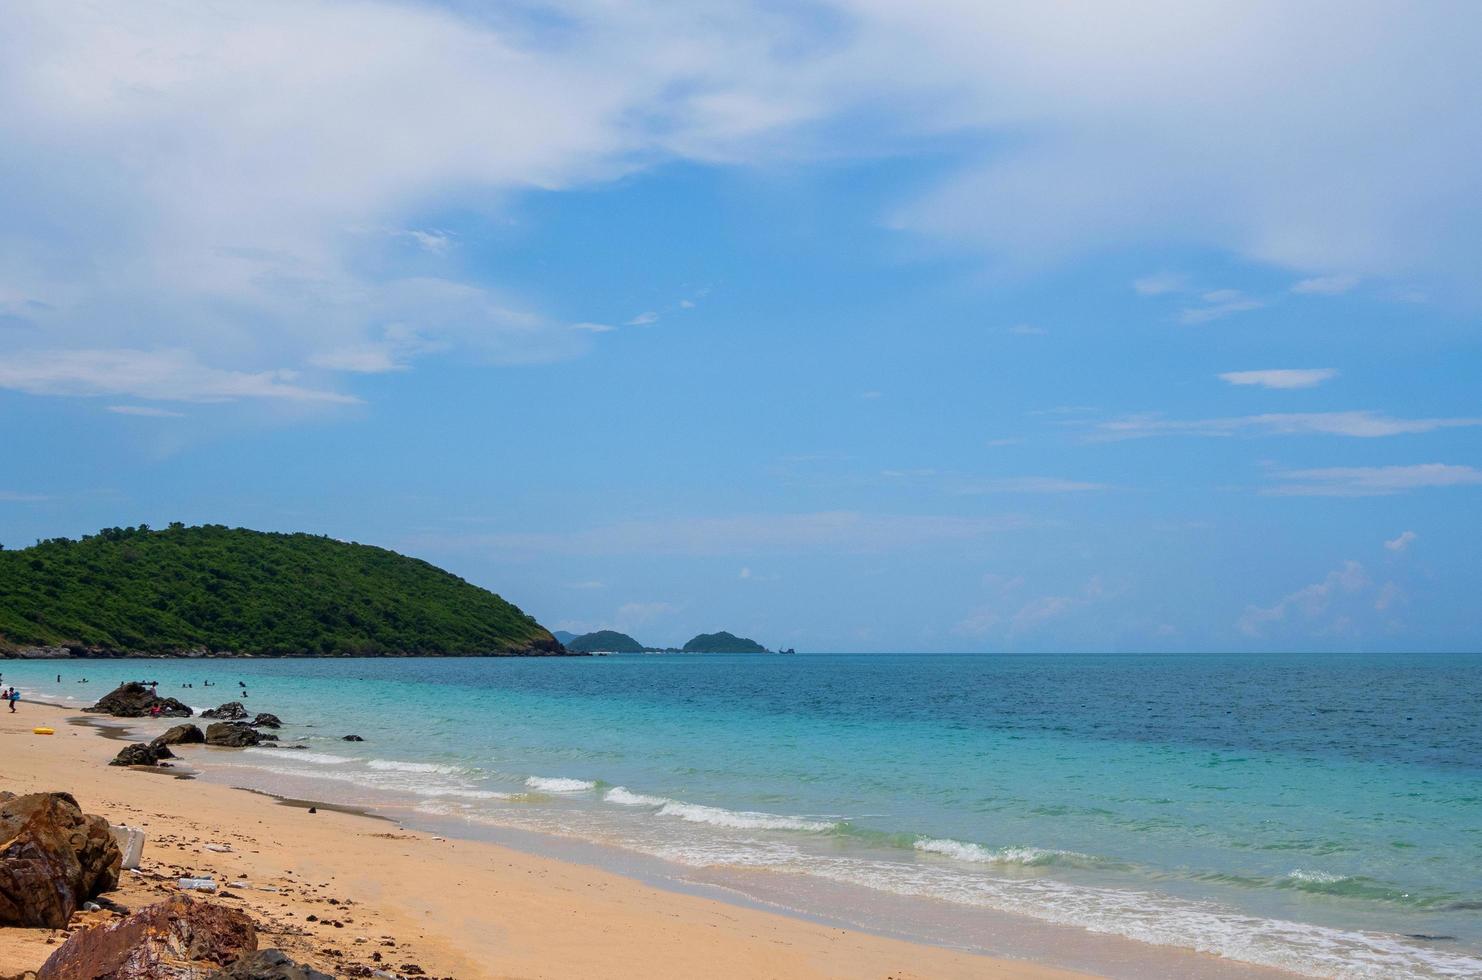 landskap sommar främre se tropisk hav strand sten blå vit sand bakgrund lugna natur hav skön Vinka krascha stänk vatten resa nang Bagge strand öst thailand chonburi exotisk horisont. foto